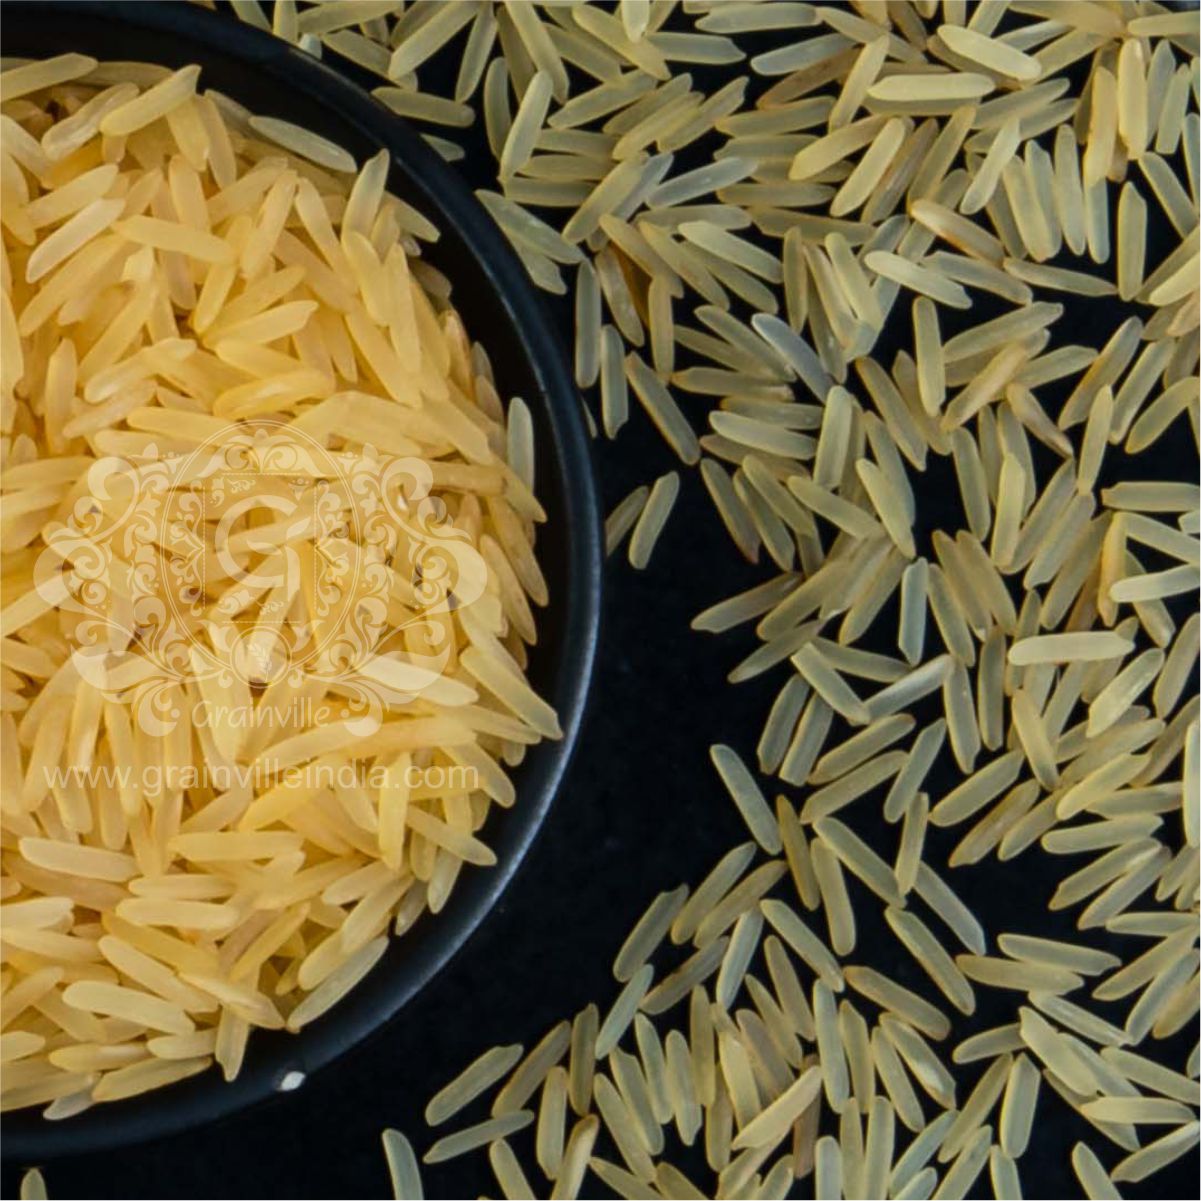 1718 Golden Sella Basmati Rice in a black bowl